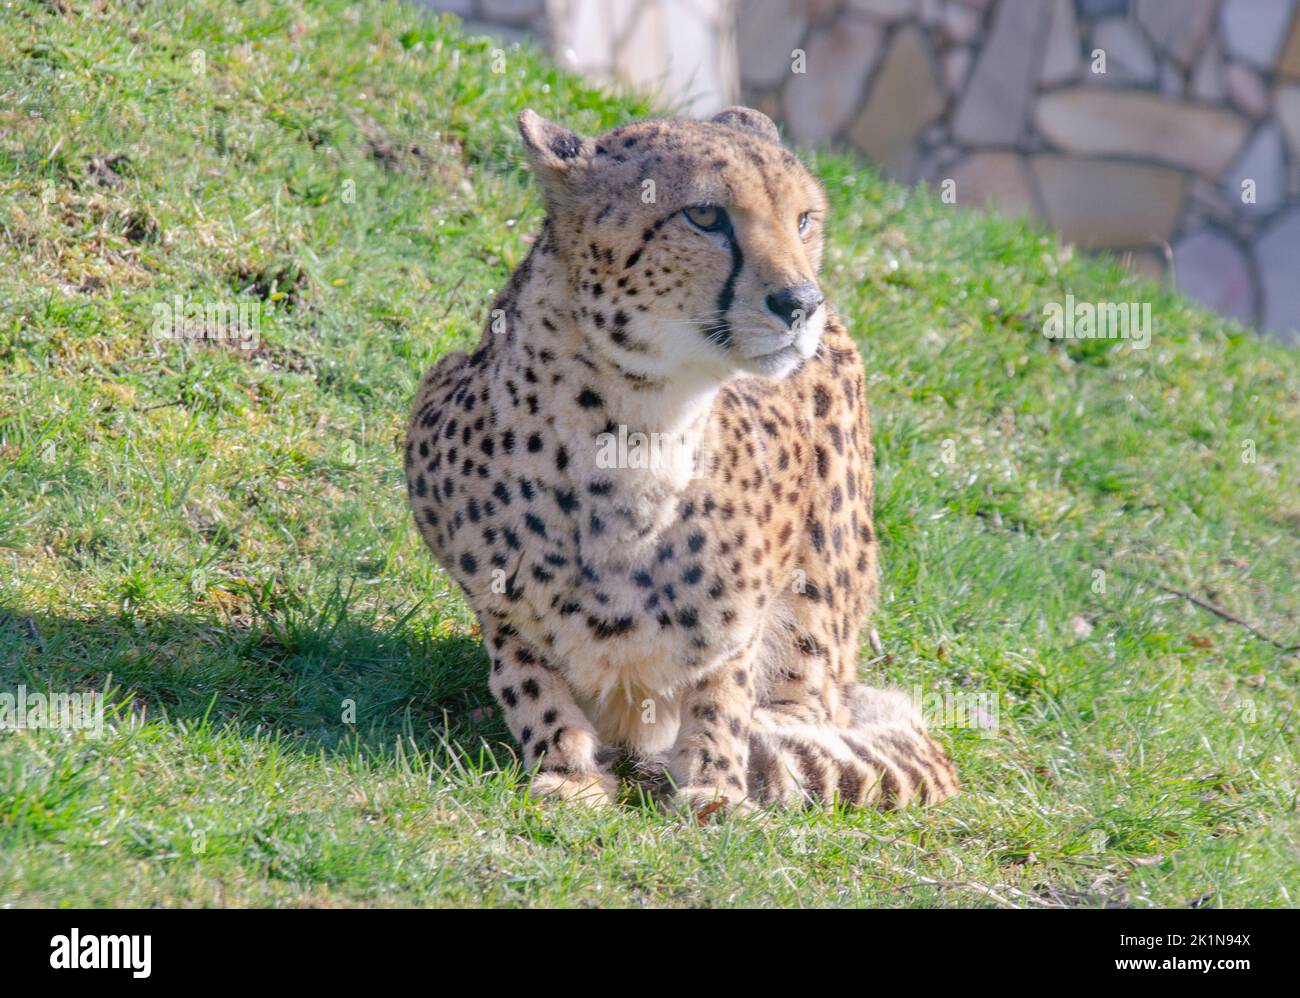 Aachen: A cheetah in the zoo Stock Photo